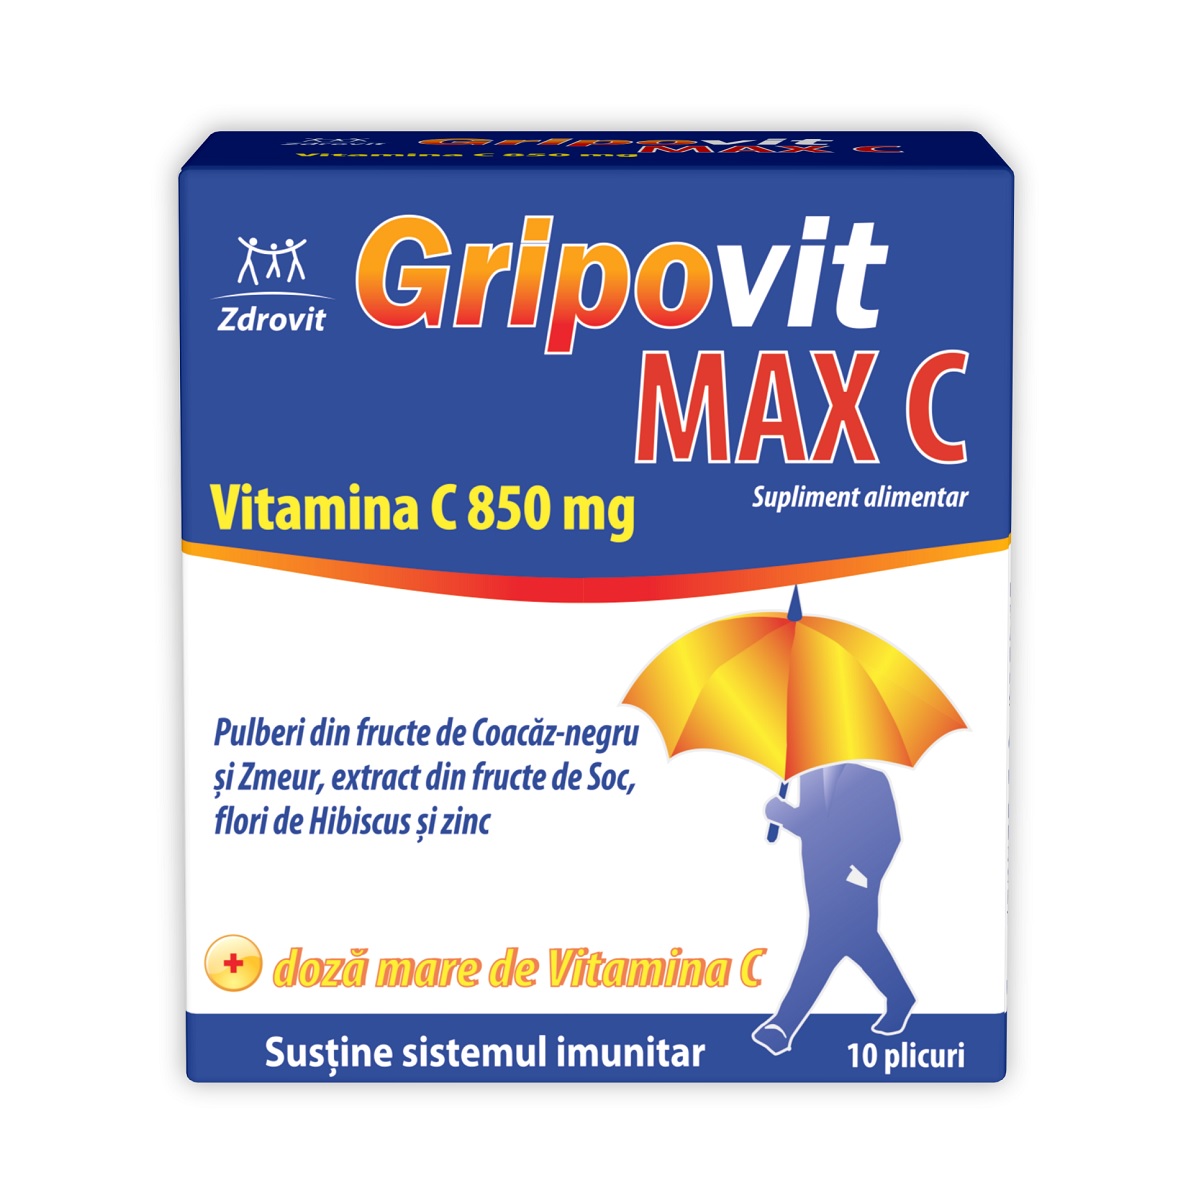 Raceala si gripa - Gripovit Max C, 10 plicuri, Zdrovit, sinapis.ro